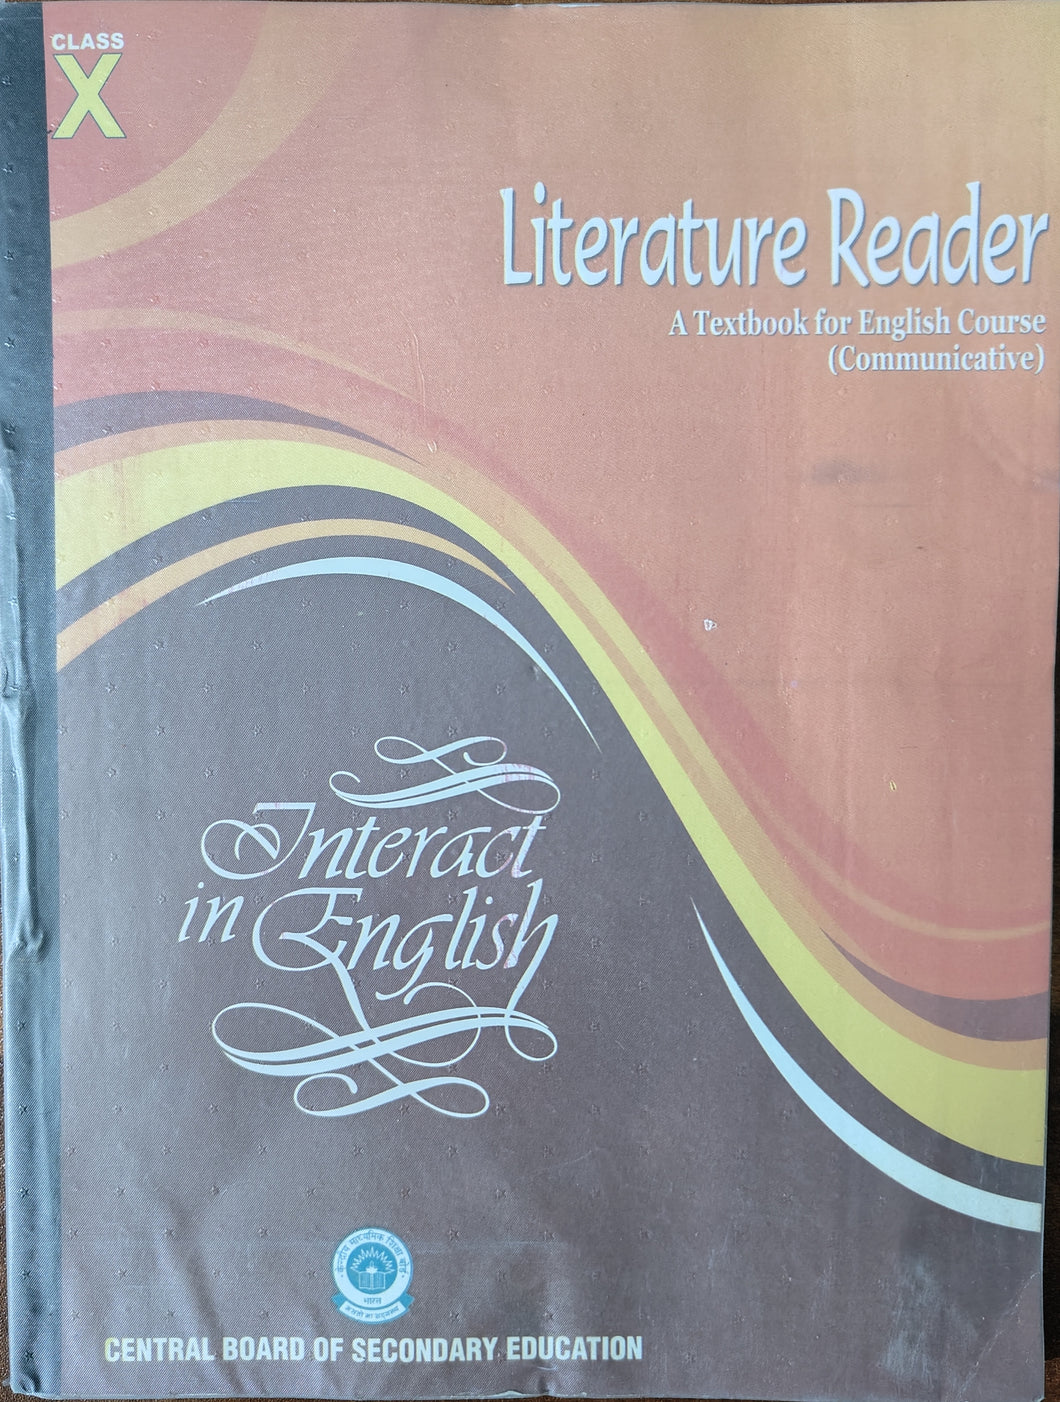 English Course Communicative: Literature Interact in English - Class 10